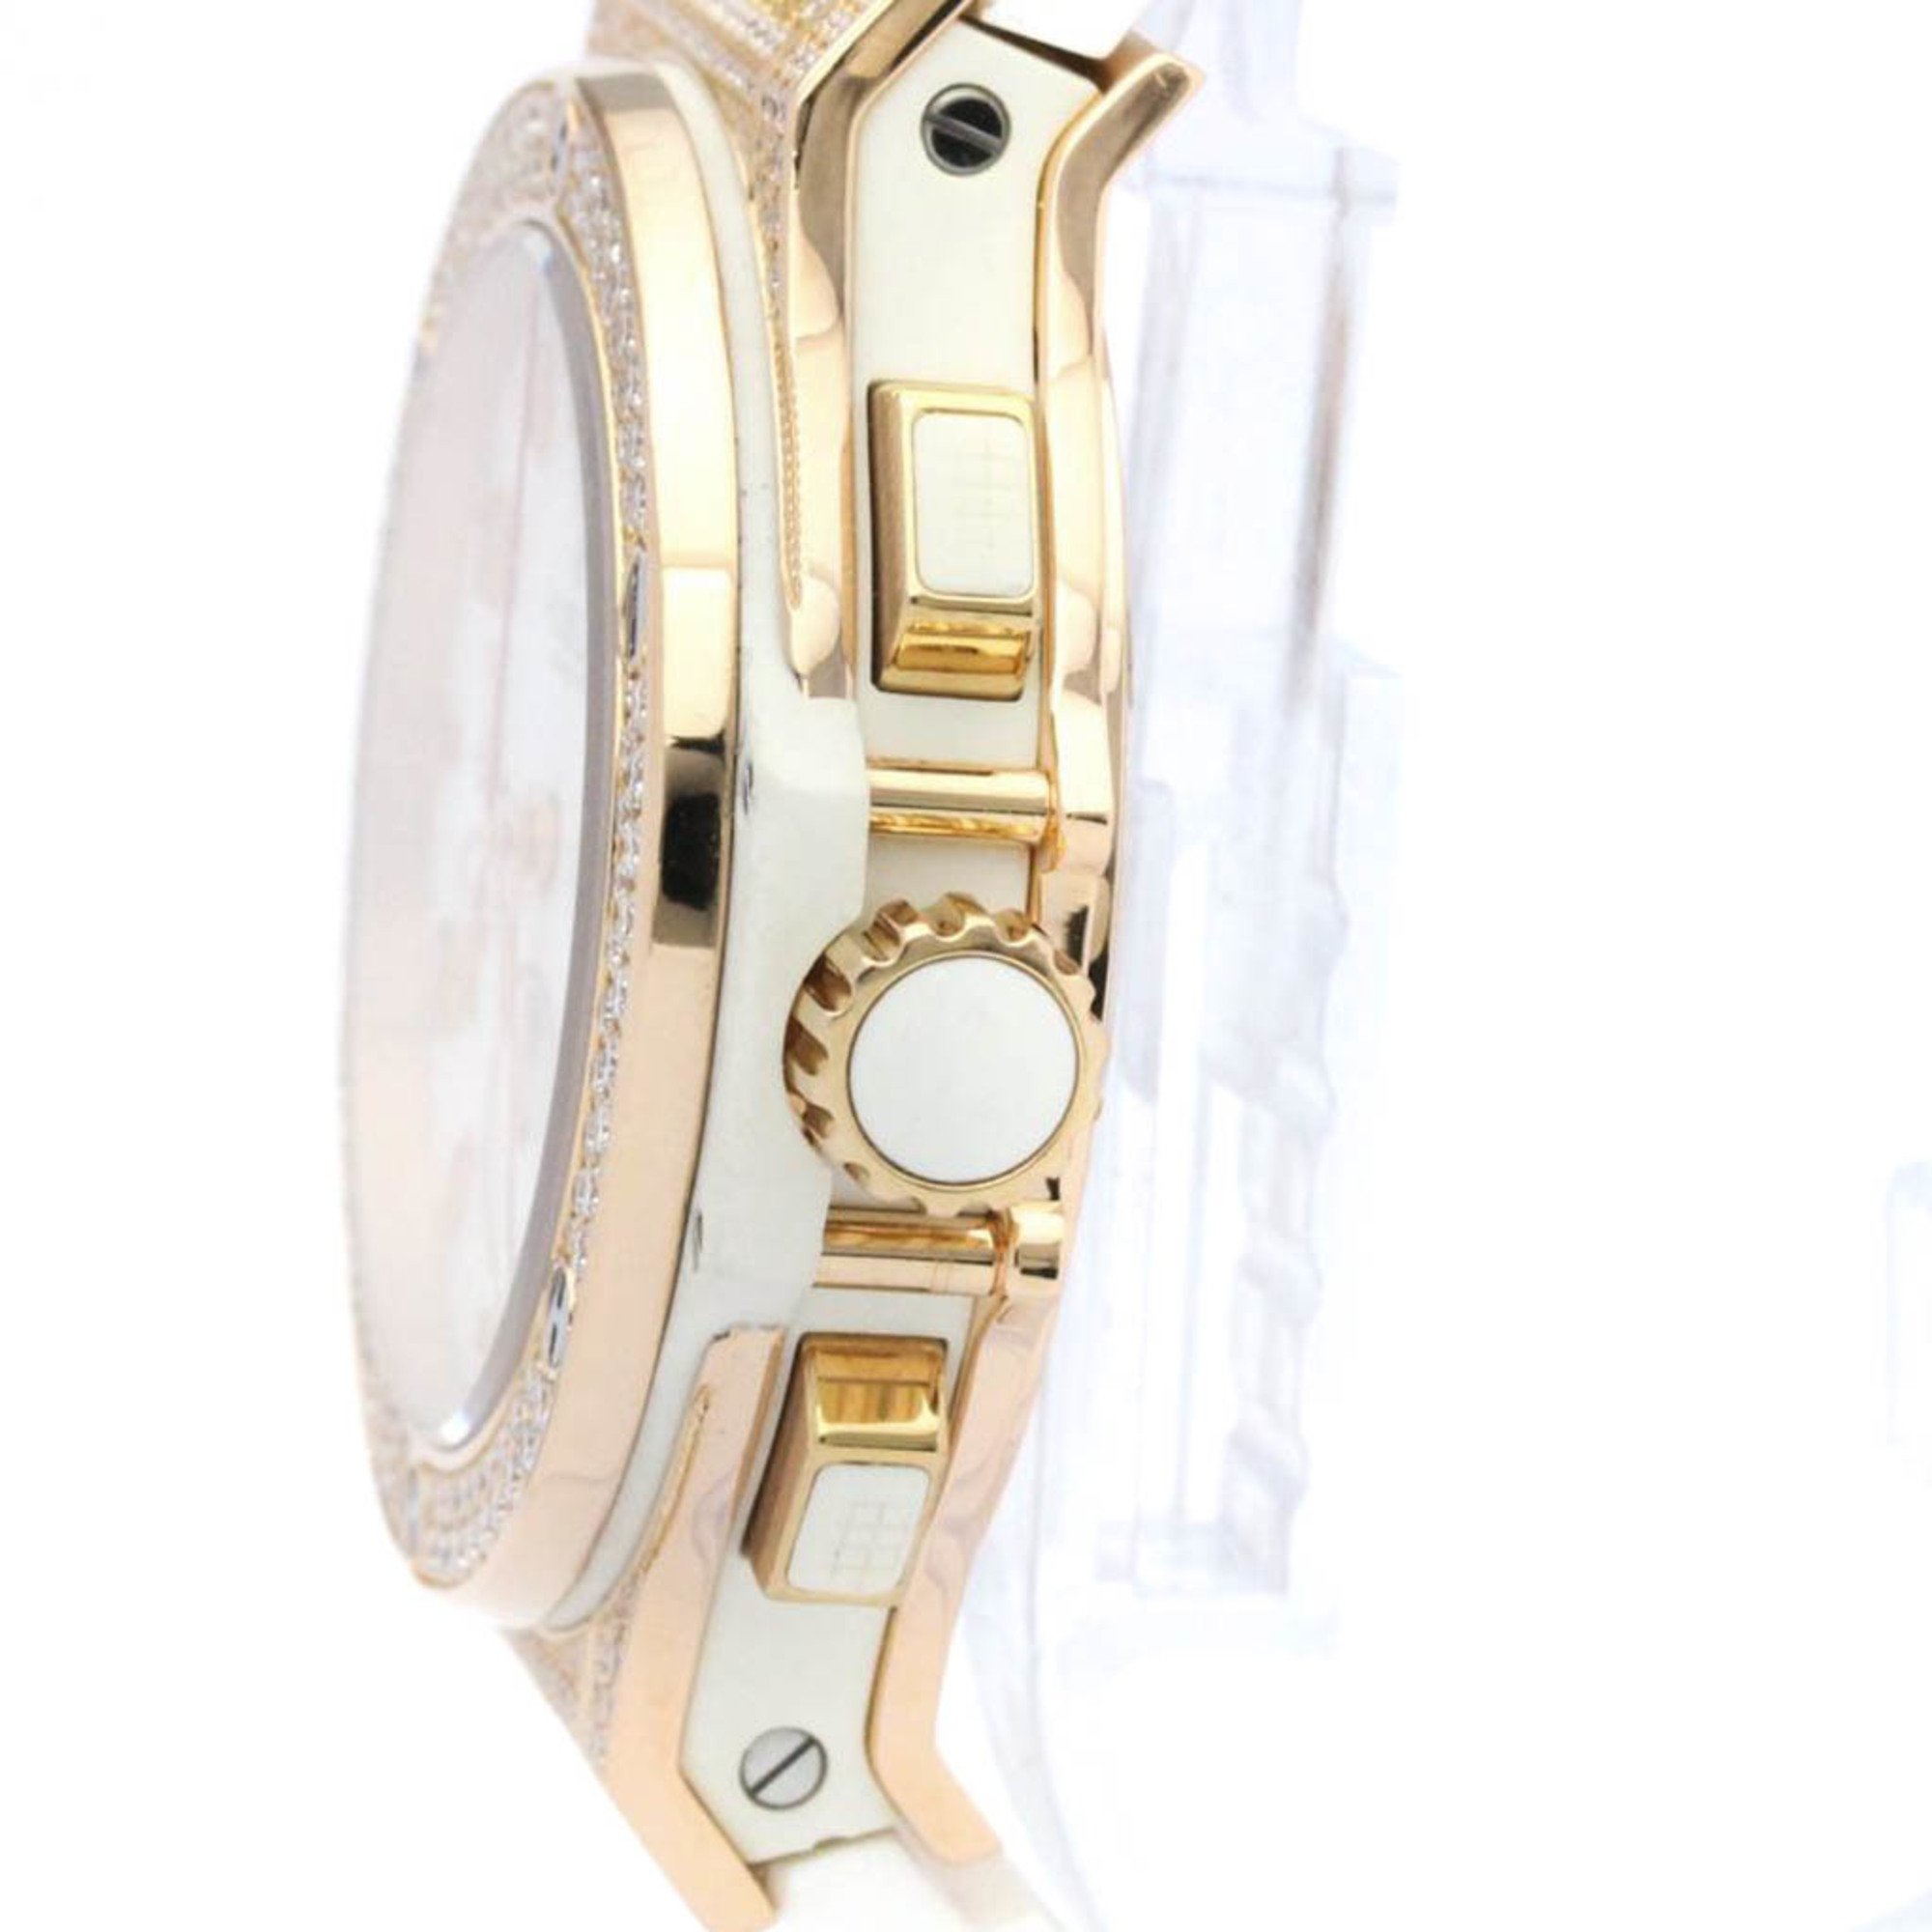 Polished HUBLOT Big Bang Diamond 18K Pink Gold Watch 301.PE.230.RW.174 BF562493